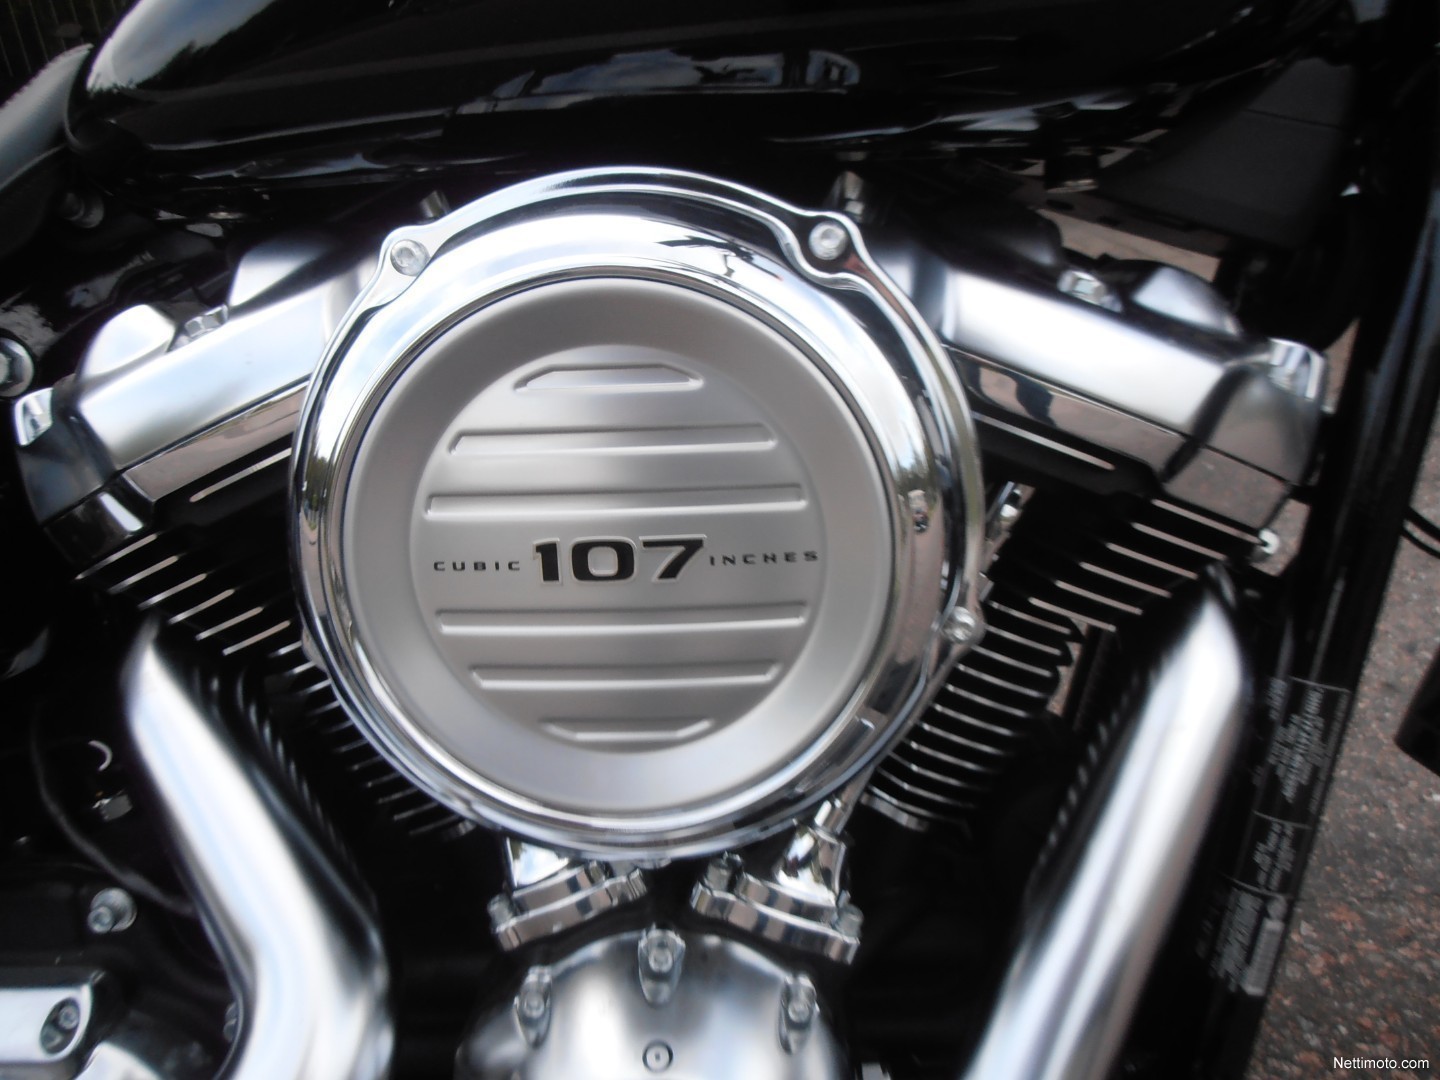  Harley Davidson Softail FLSTF Fat Boy 1 700 cm 2020 